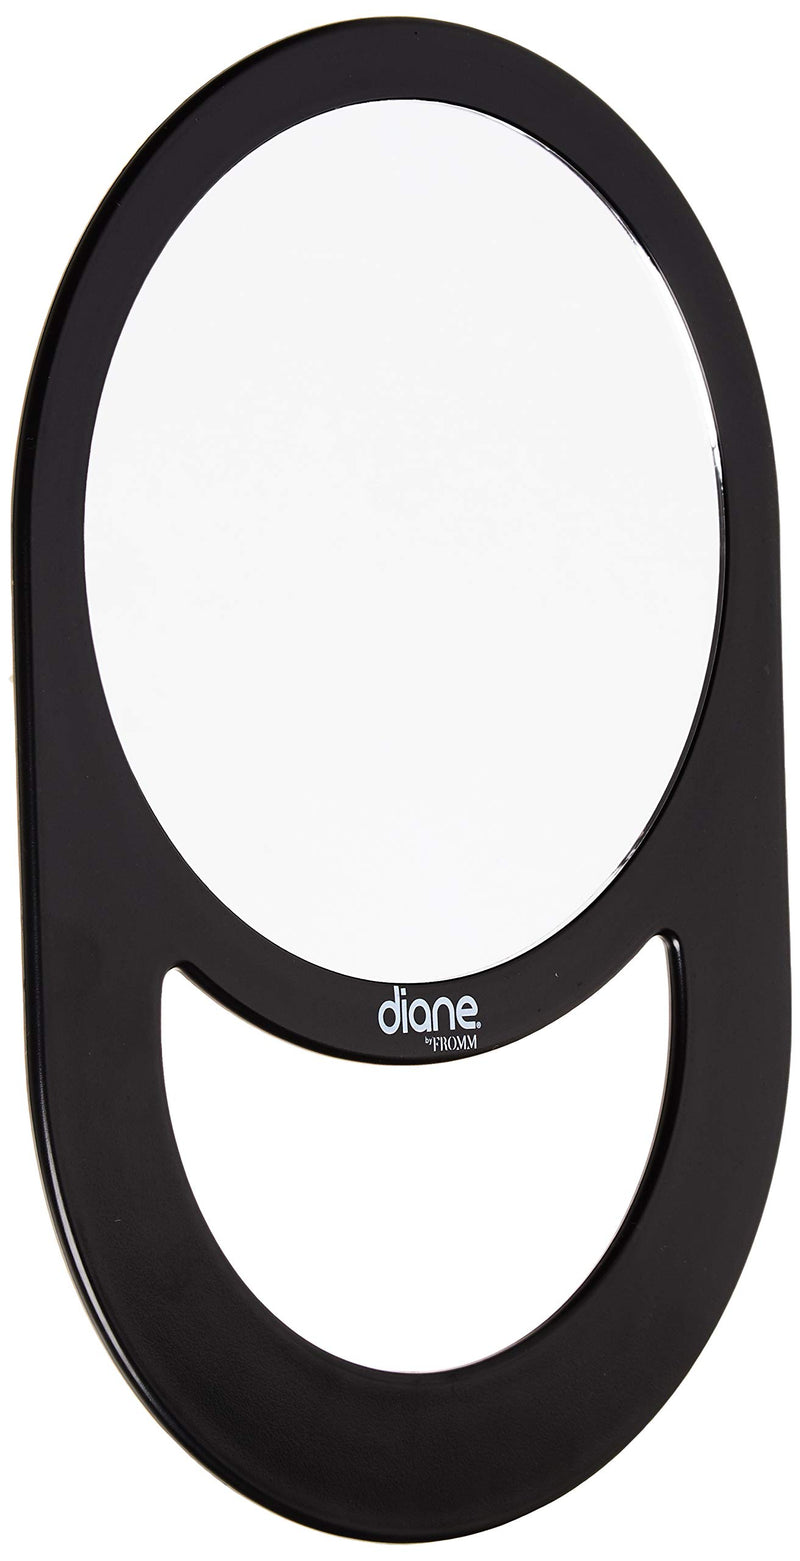 [Australia] - Diane Handle Mirror – Handheld Vanity Mirror with Circle Handle for Hanging – Medium Size (11” x 7.5”) for Travel, Bathroom, Desk, Makeup, Beauty, Grooming, Shaving, D1021 1-Sided Circle Handle Black 